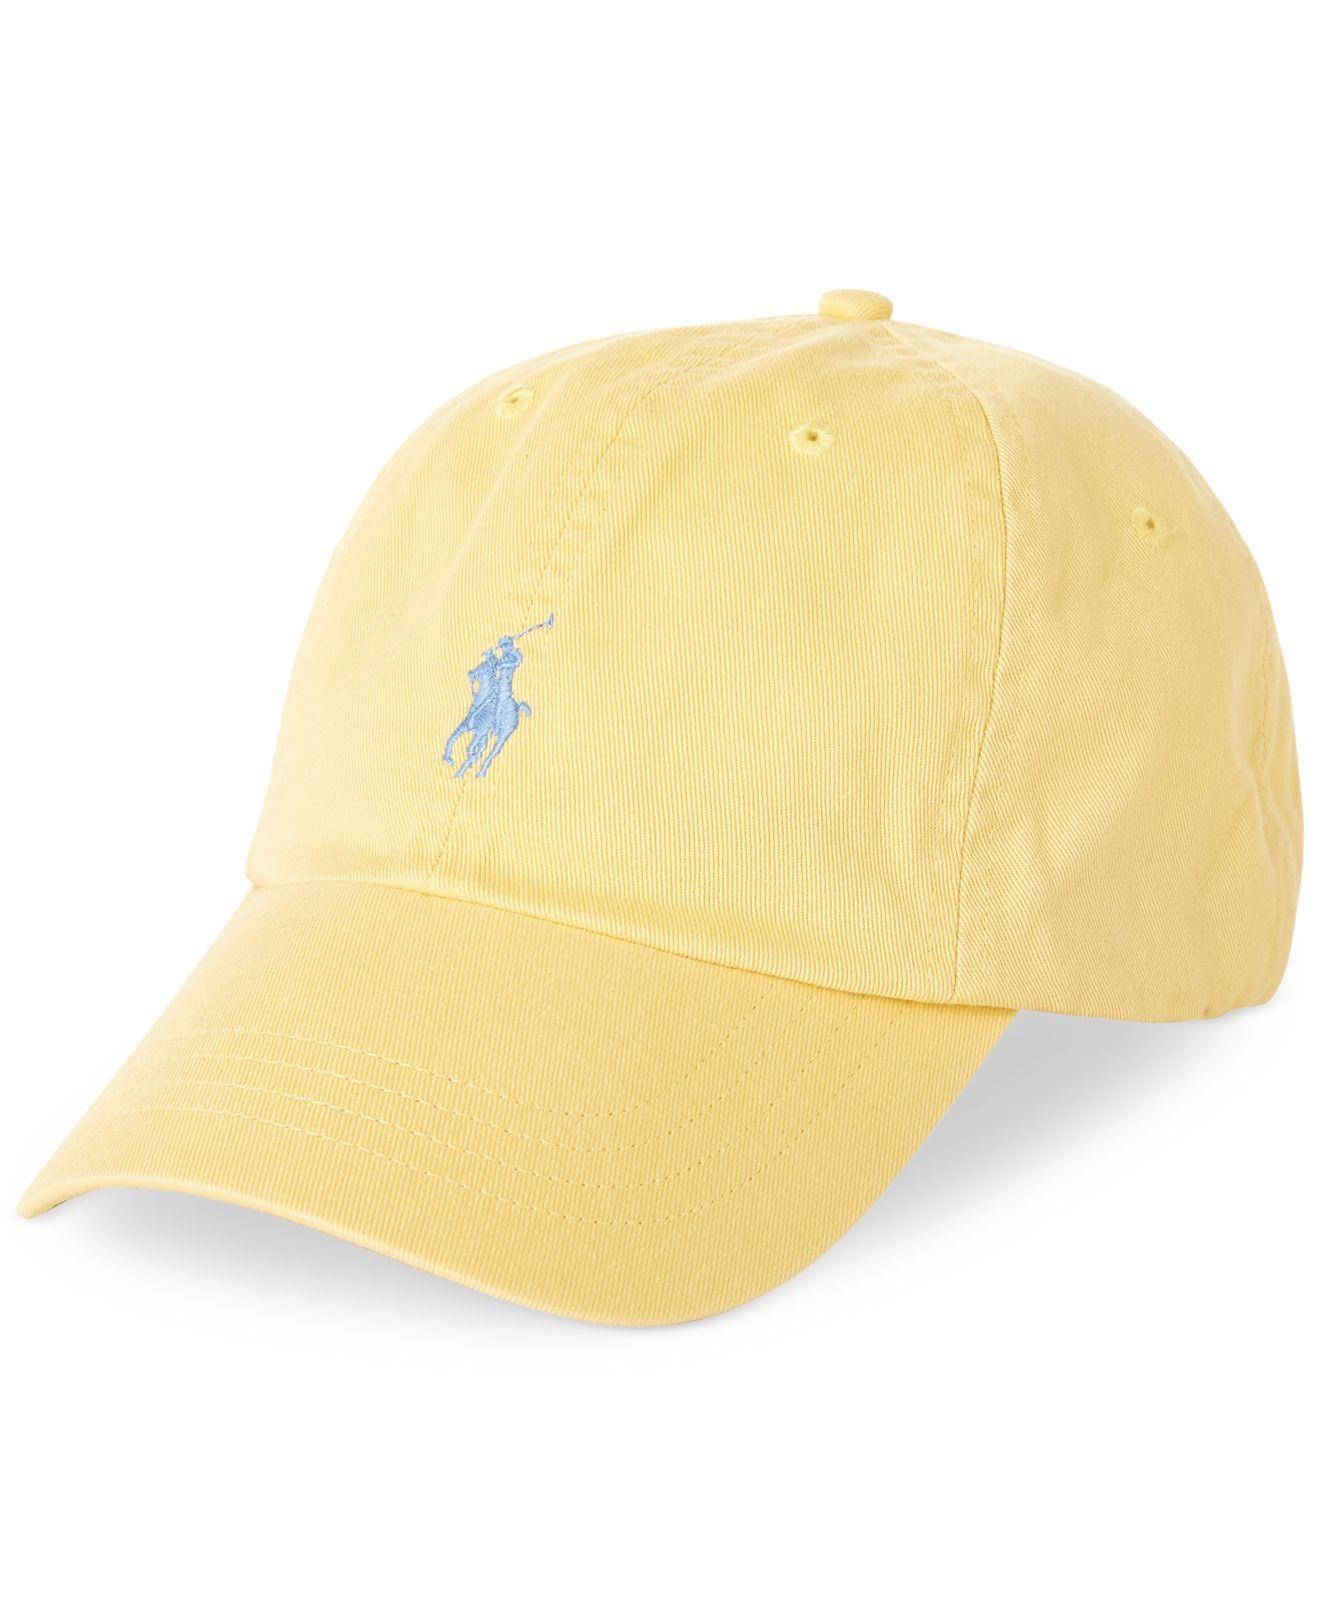 Polo Ralph Lauren Chino Sport Cap in Yellow for Men - Lyst